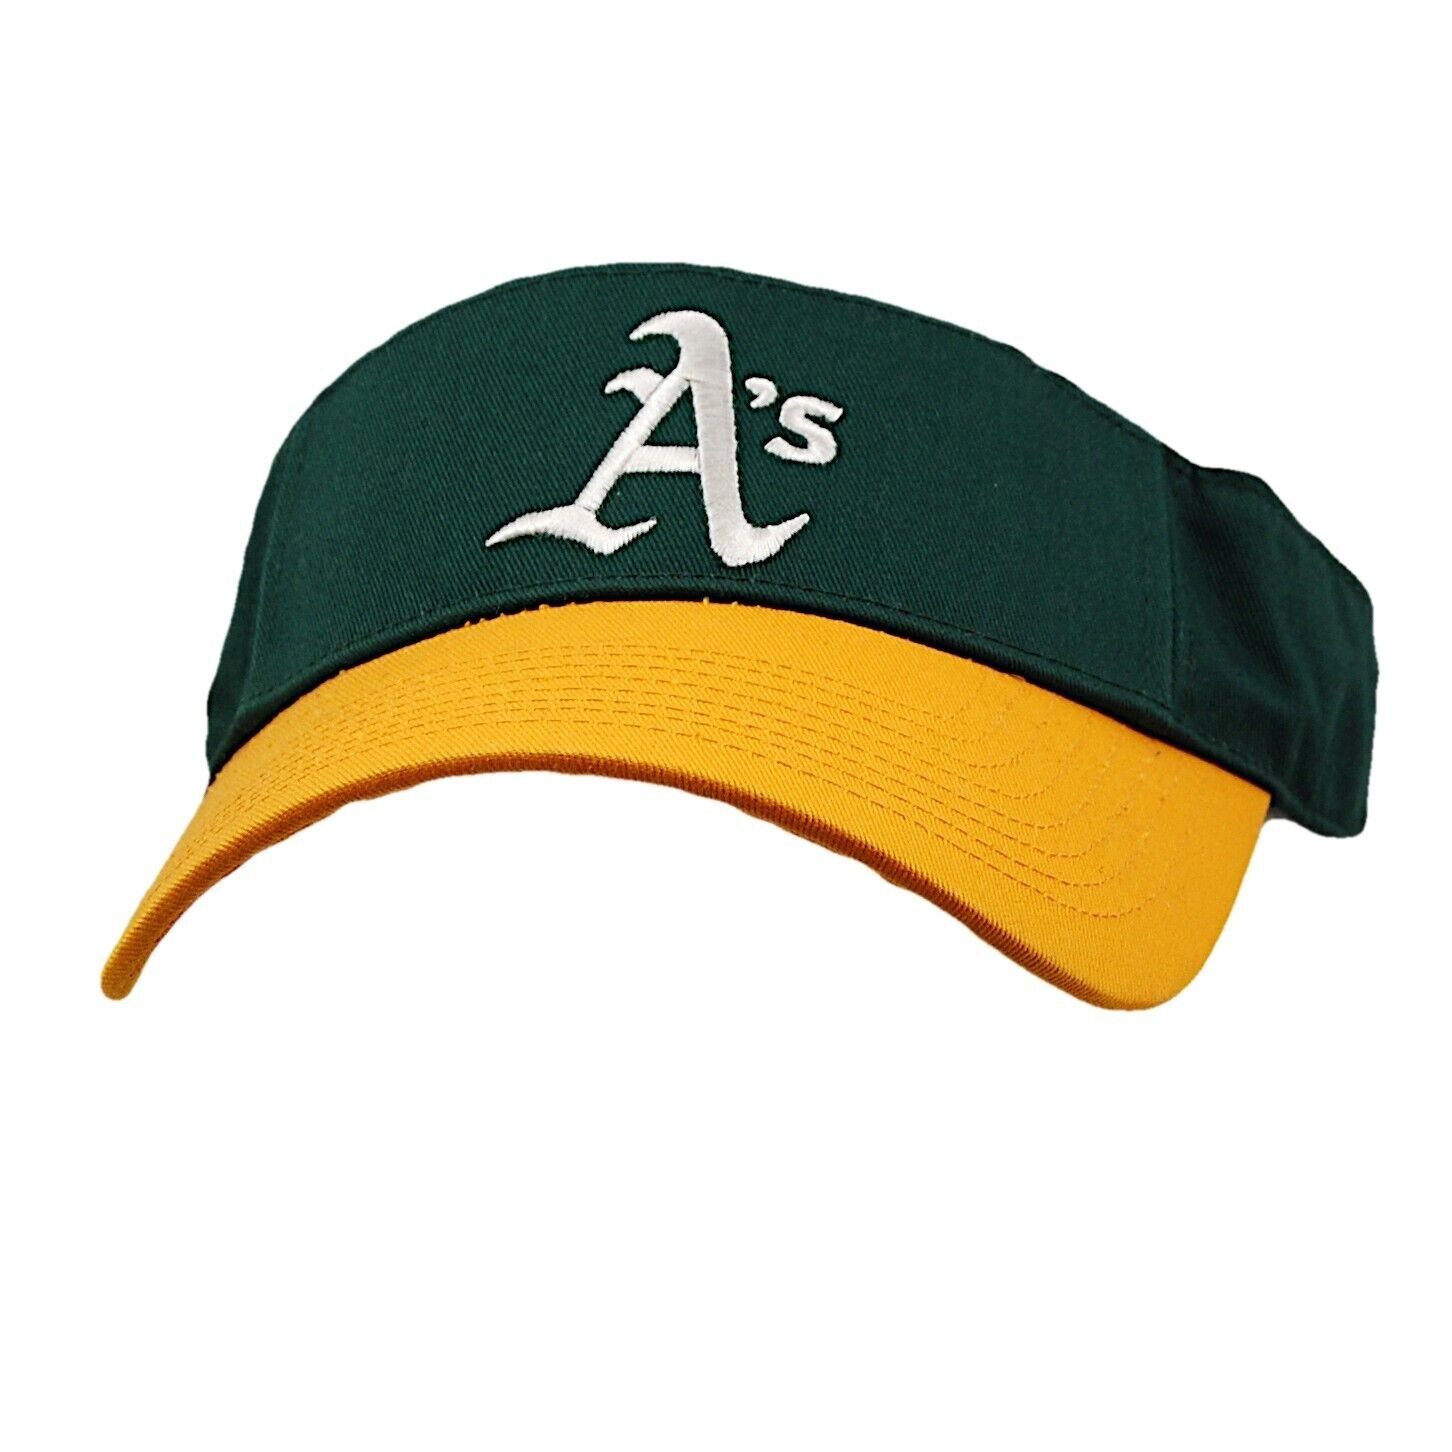 MLB Oakland Athletics A\'s MLB Hat by OC Sports Golf Sun Visor Cap Adjustable